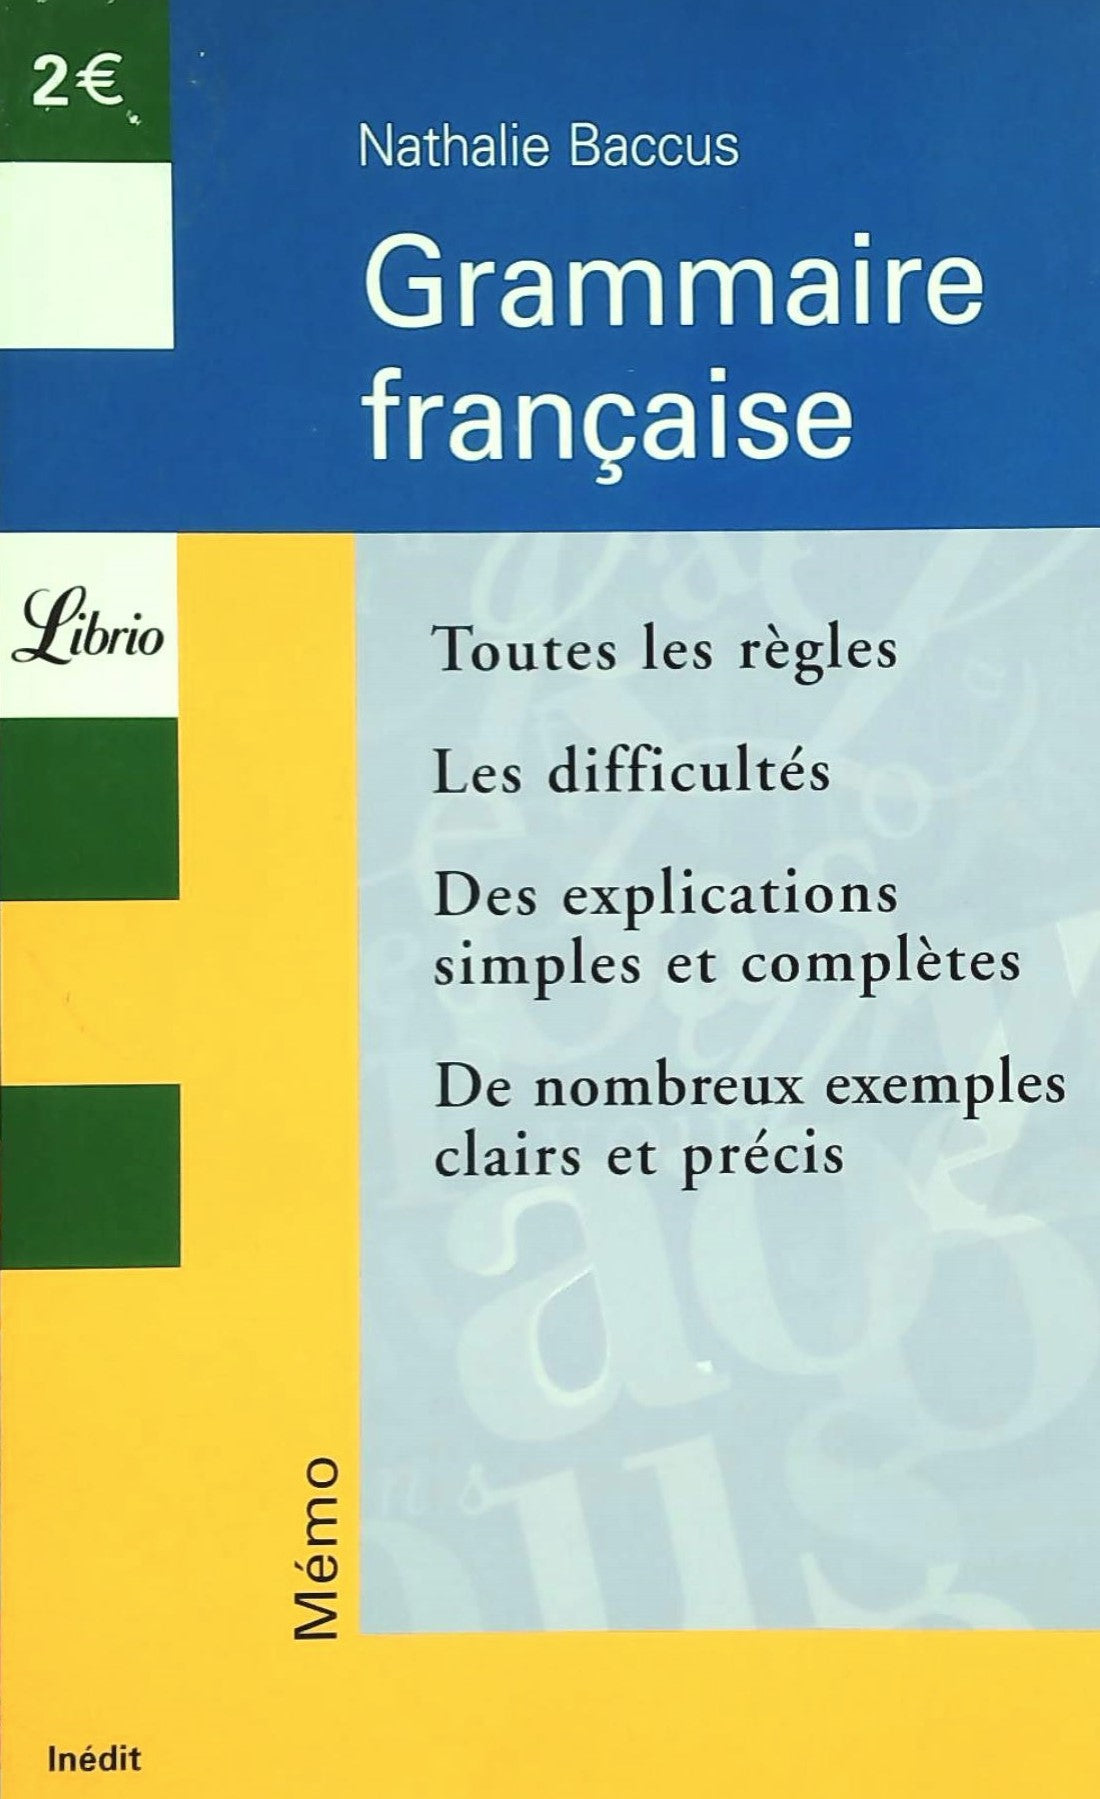 Livre ISBN 2290338850 Grammaire française (Nathalie Baccus)